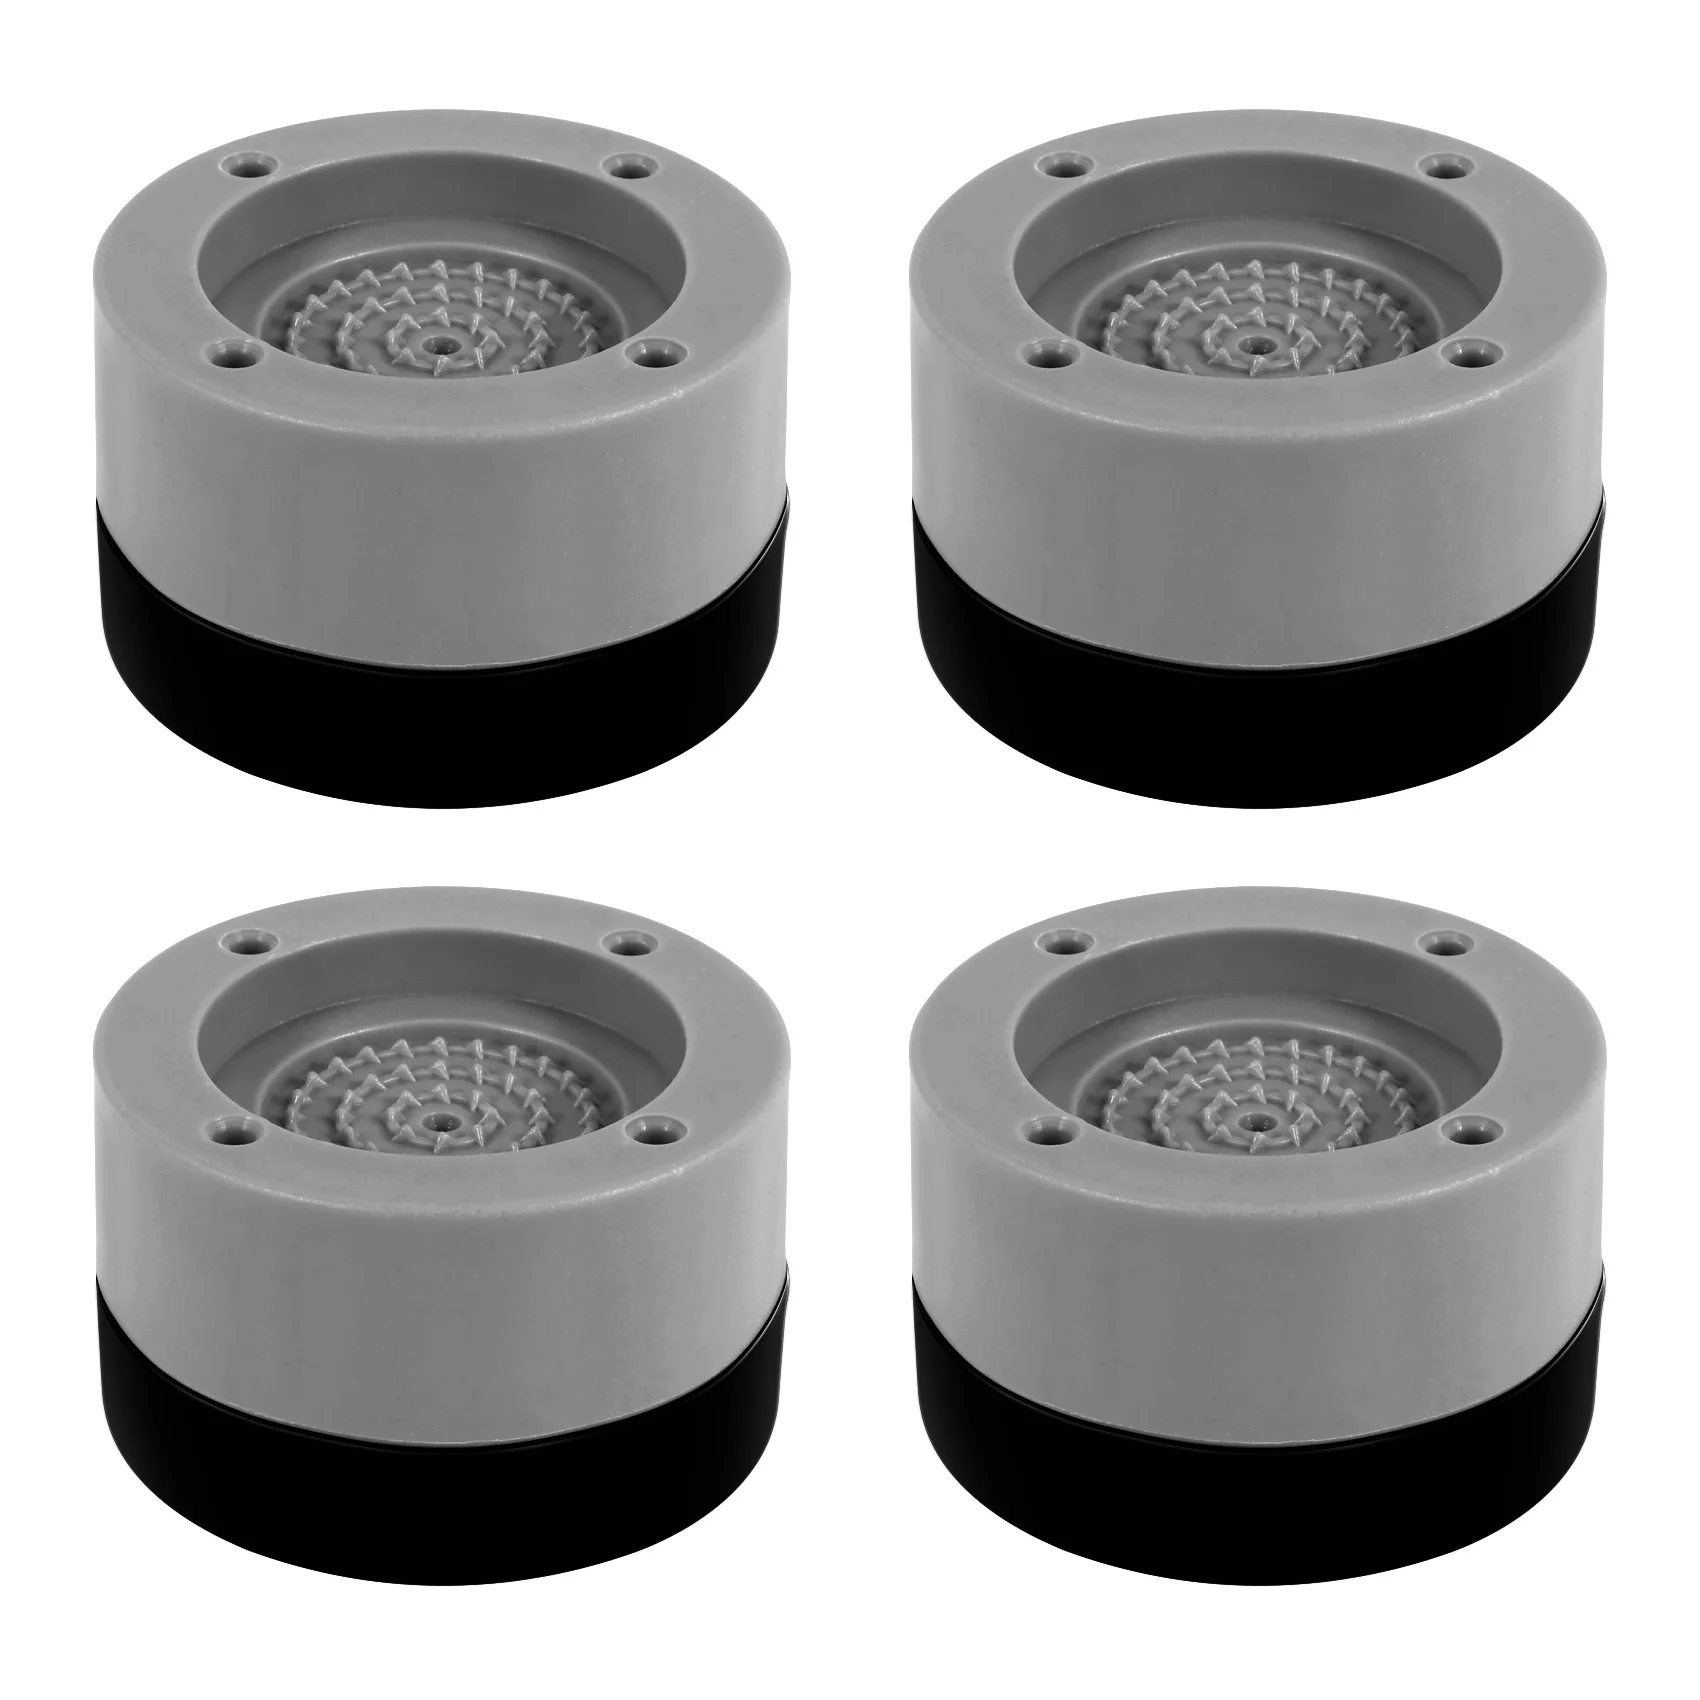 

4 PCS Foot Pads Washing Machine Anti Vibration Washer Feet Pad Anti Slip Rubber Foot Pad for Washing Machines and Dryers